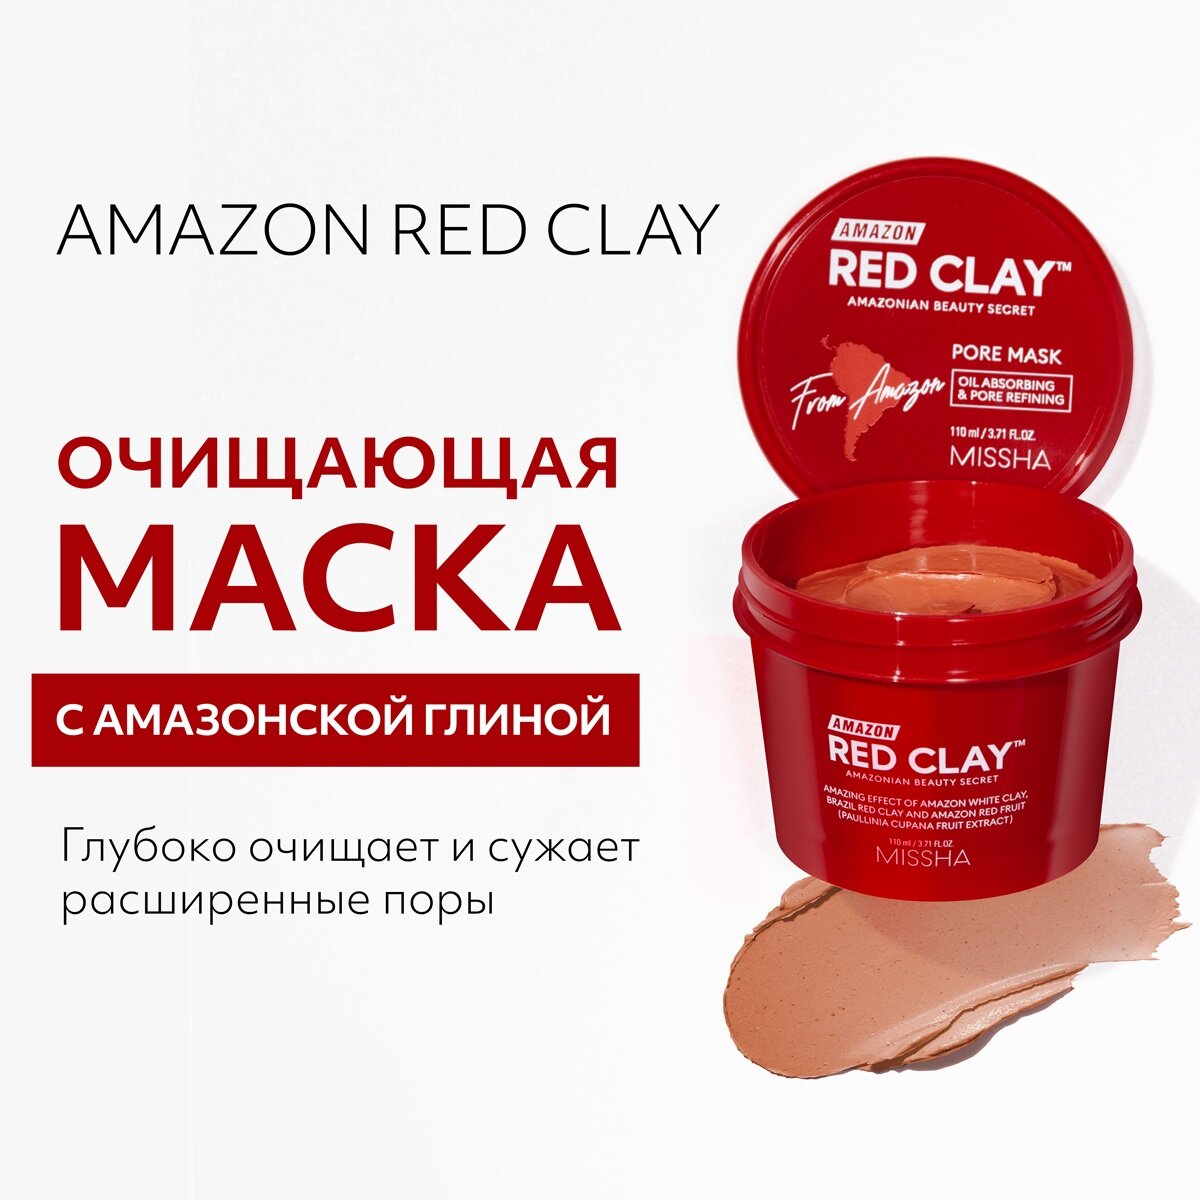 MISSHA Amazon Red Clay Маска для лица очищающая поры, 110 мл